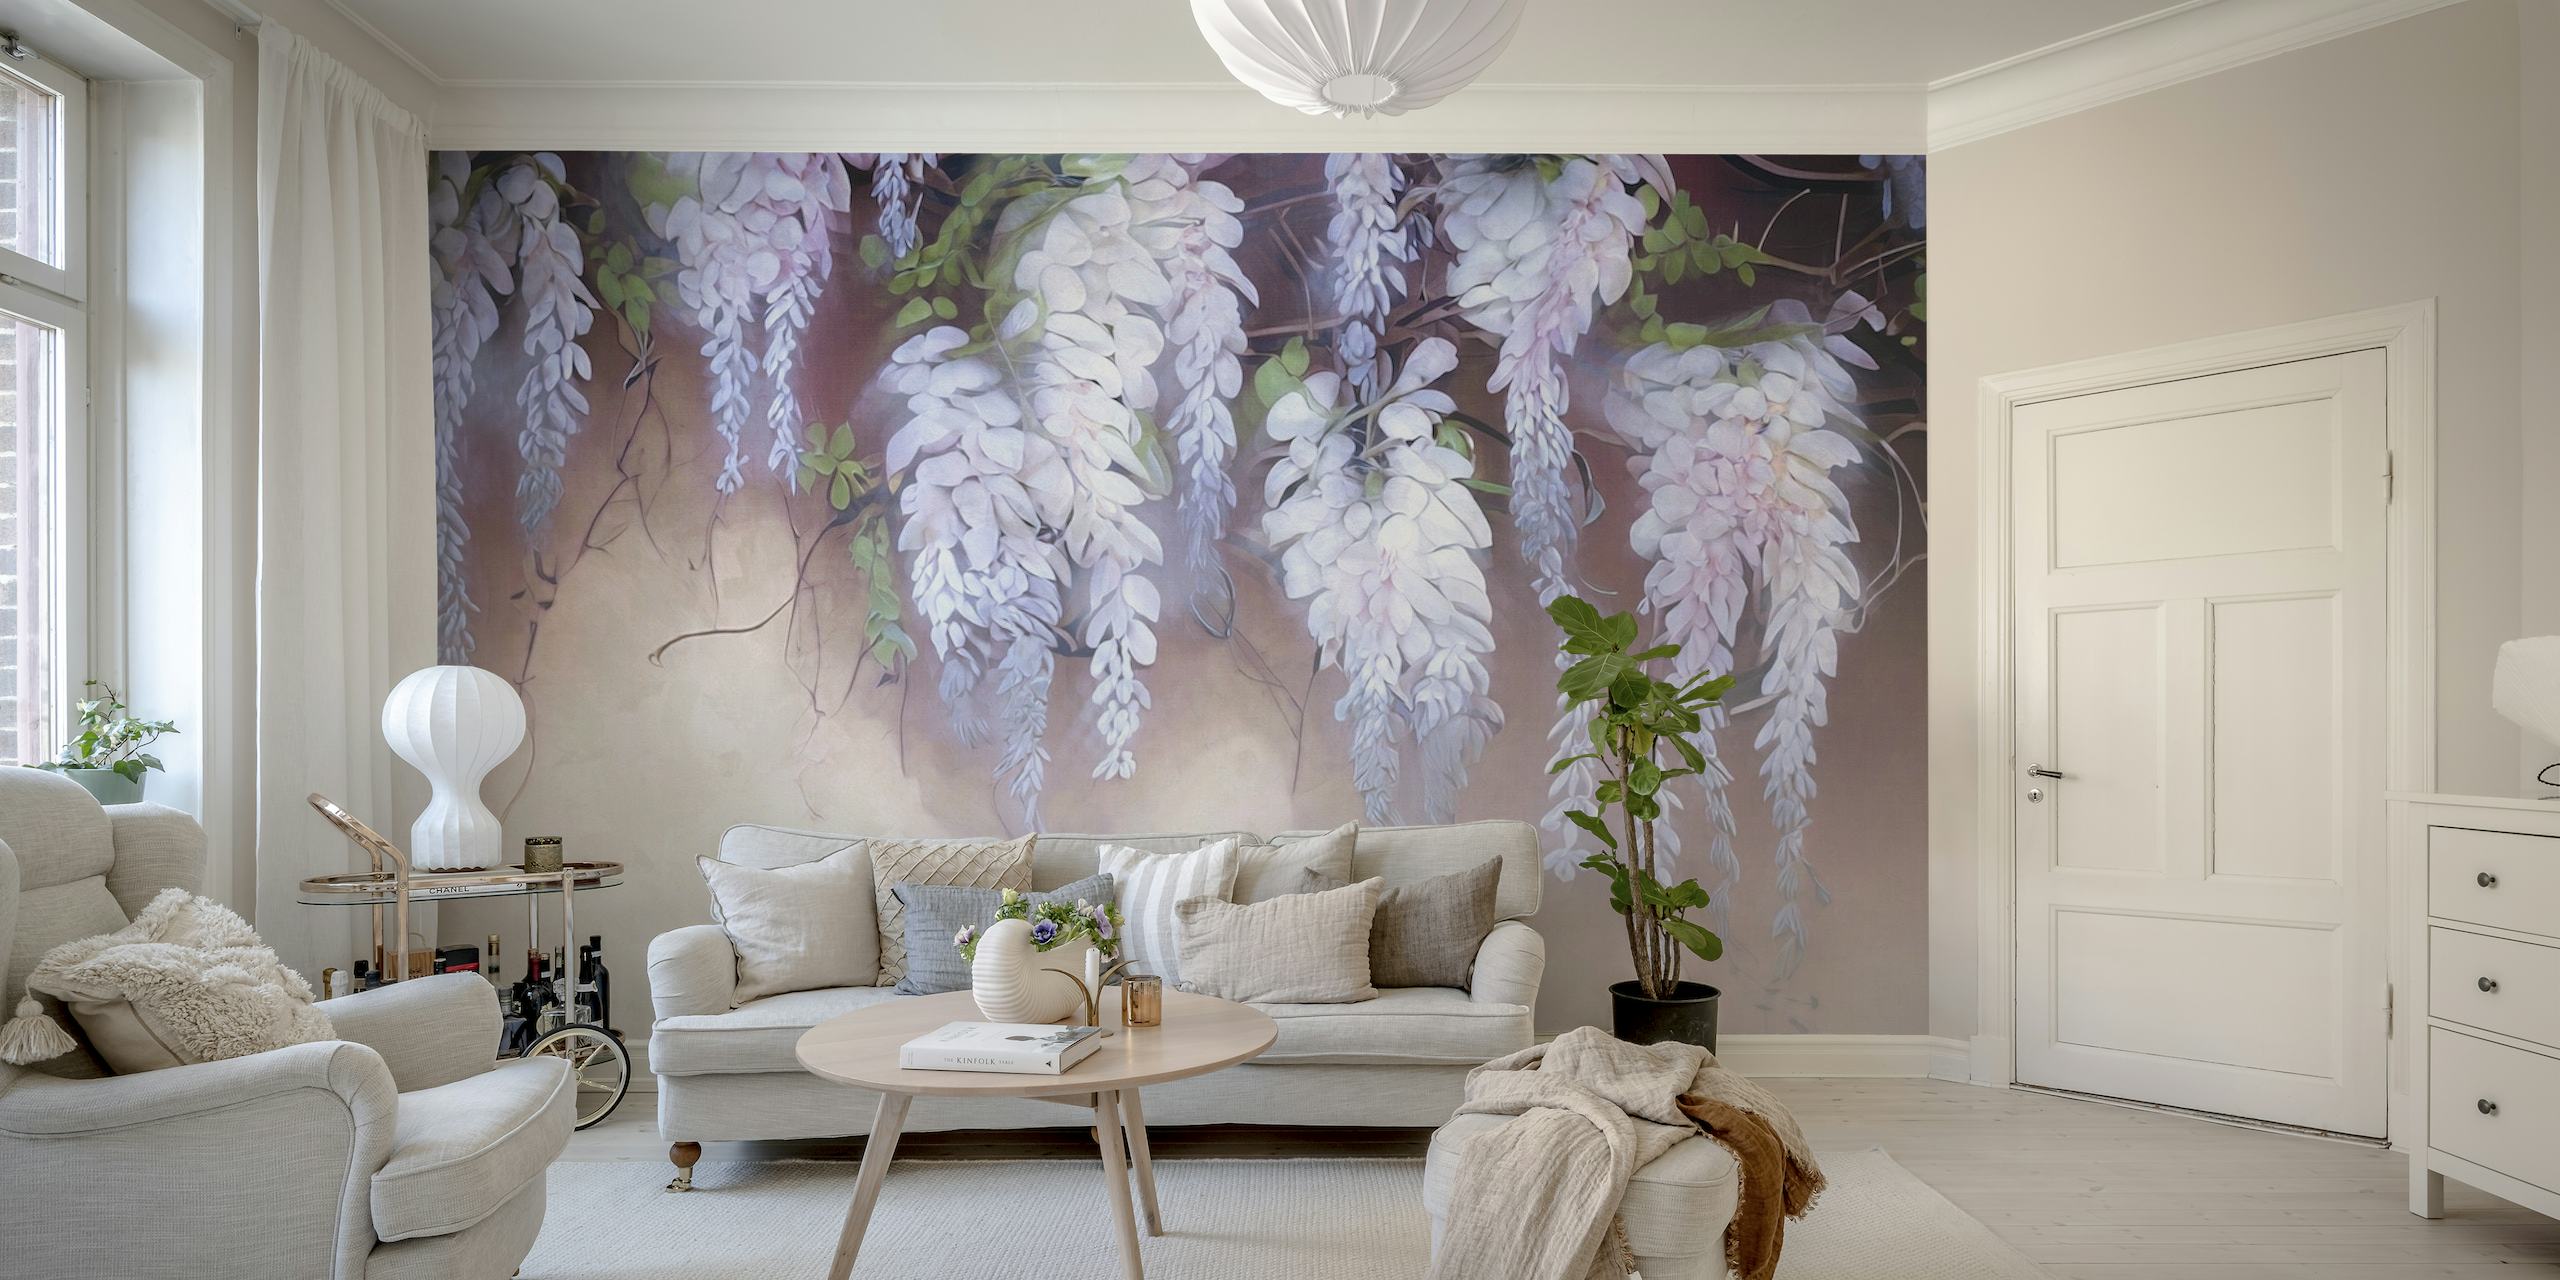 Floral wisteria wall papiers peint